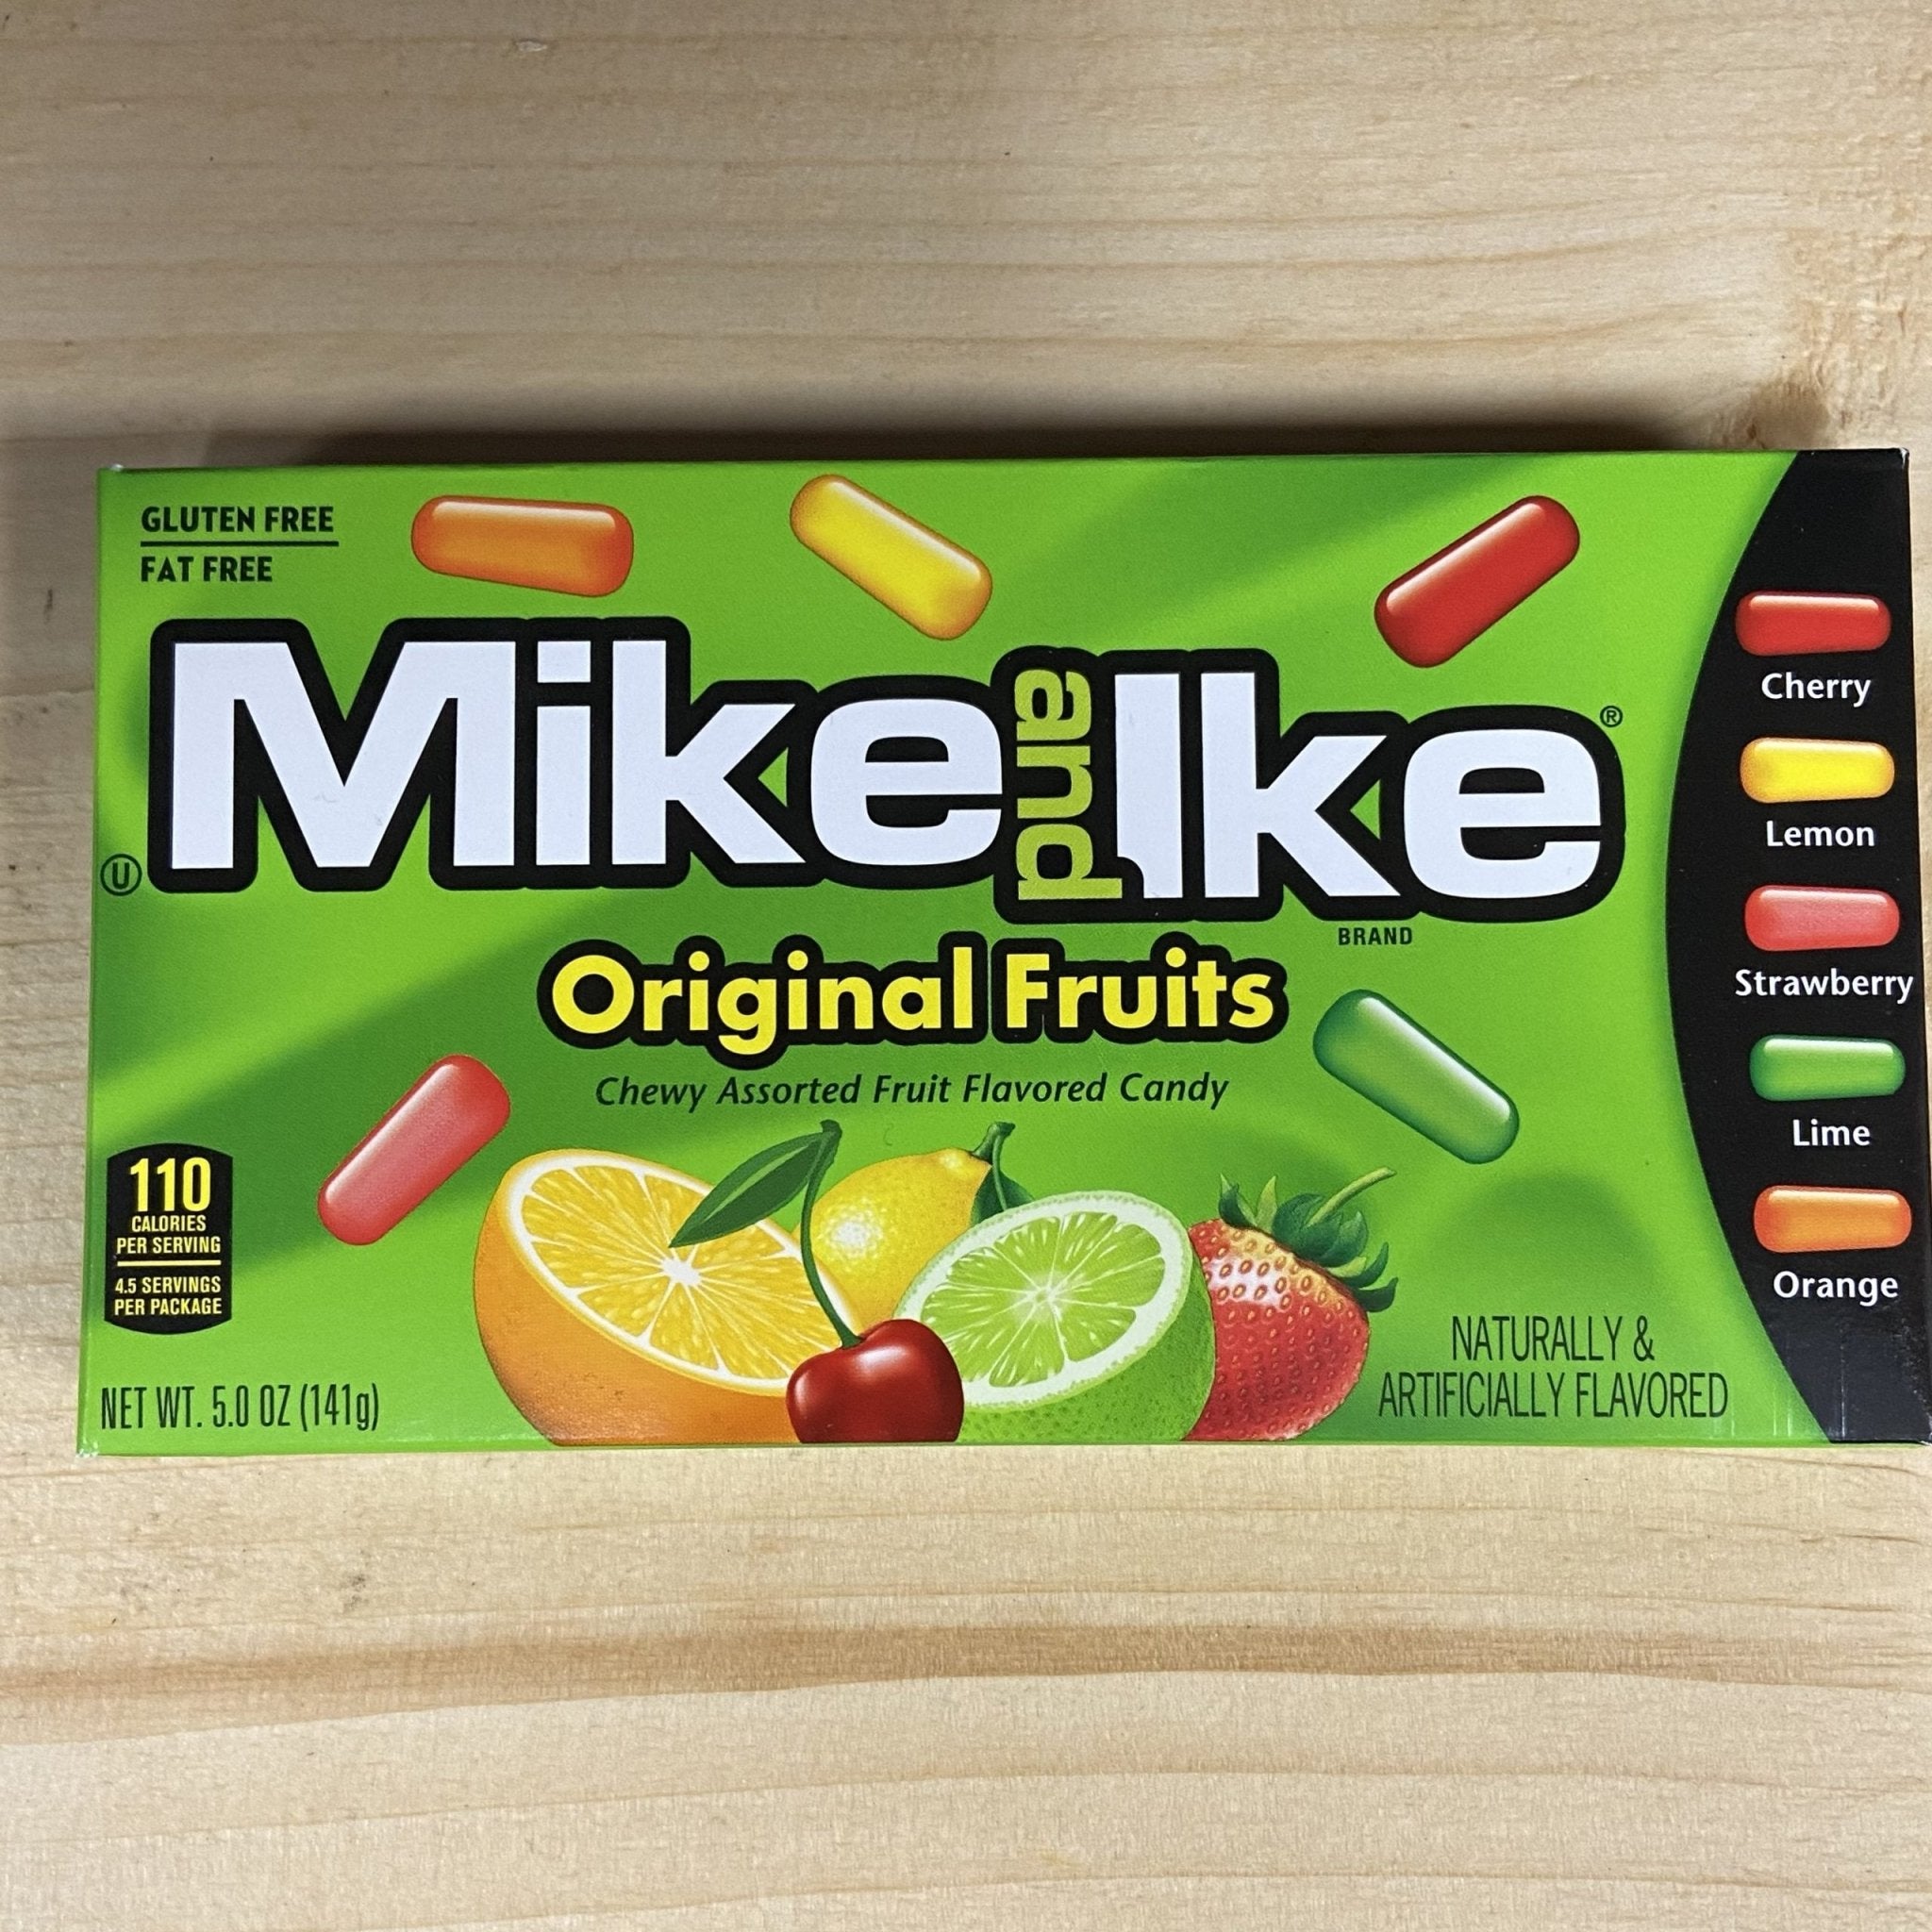 Mike andike original fruits - Dream Candy